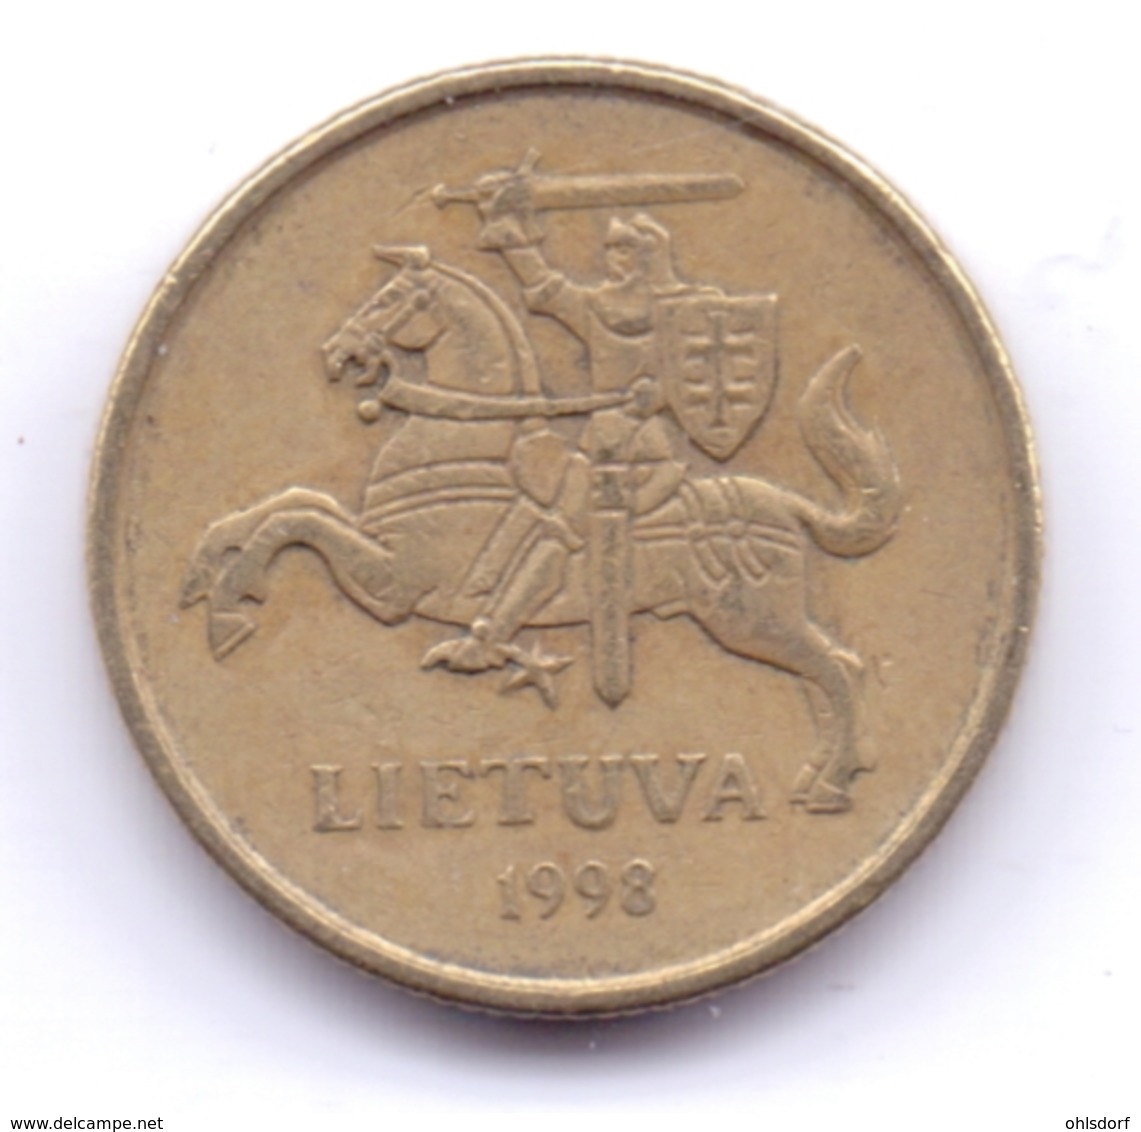 LIETUVA 1998: 20 Centu, KM 107 - Lituanie